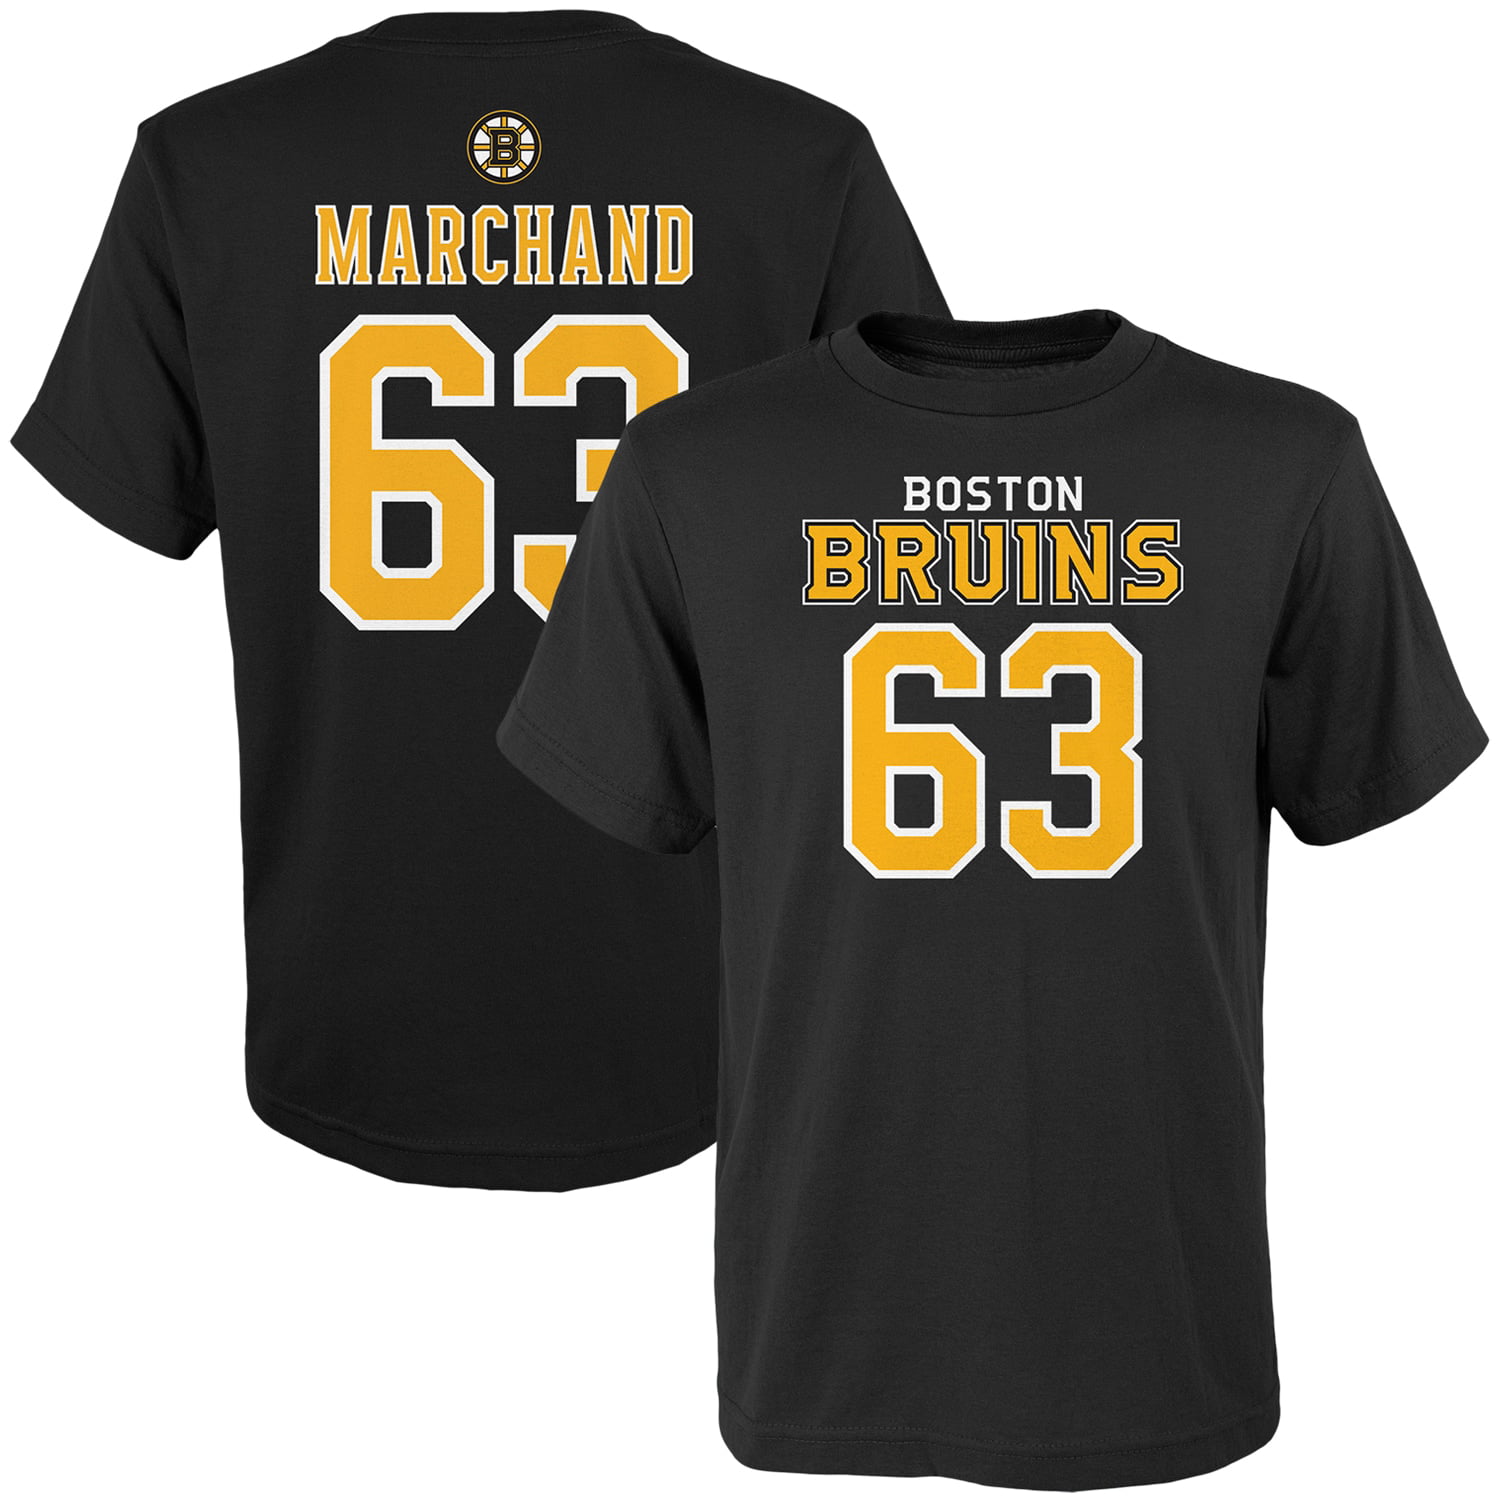 Brad Marchand Jerseys, Brad Marchand Shirt, NHL Brad Marchand Gear